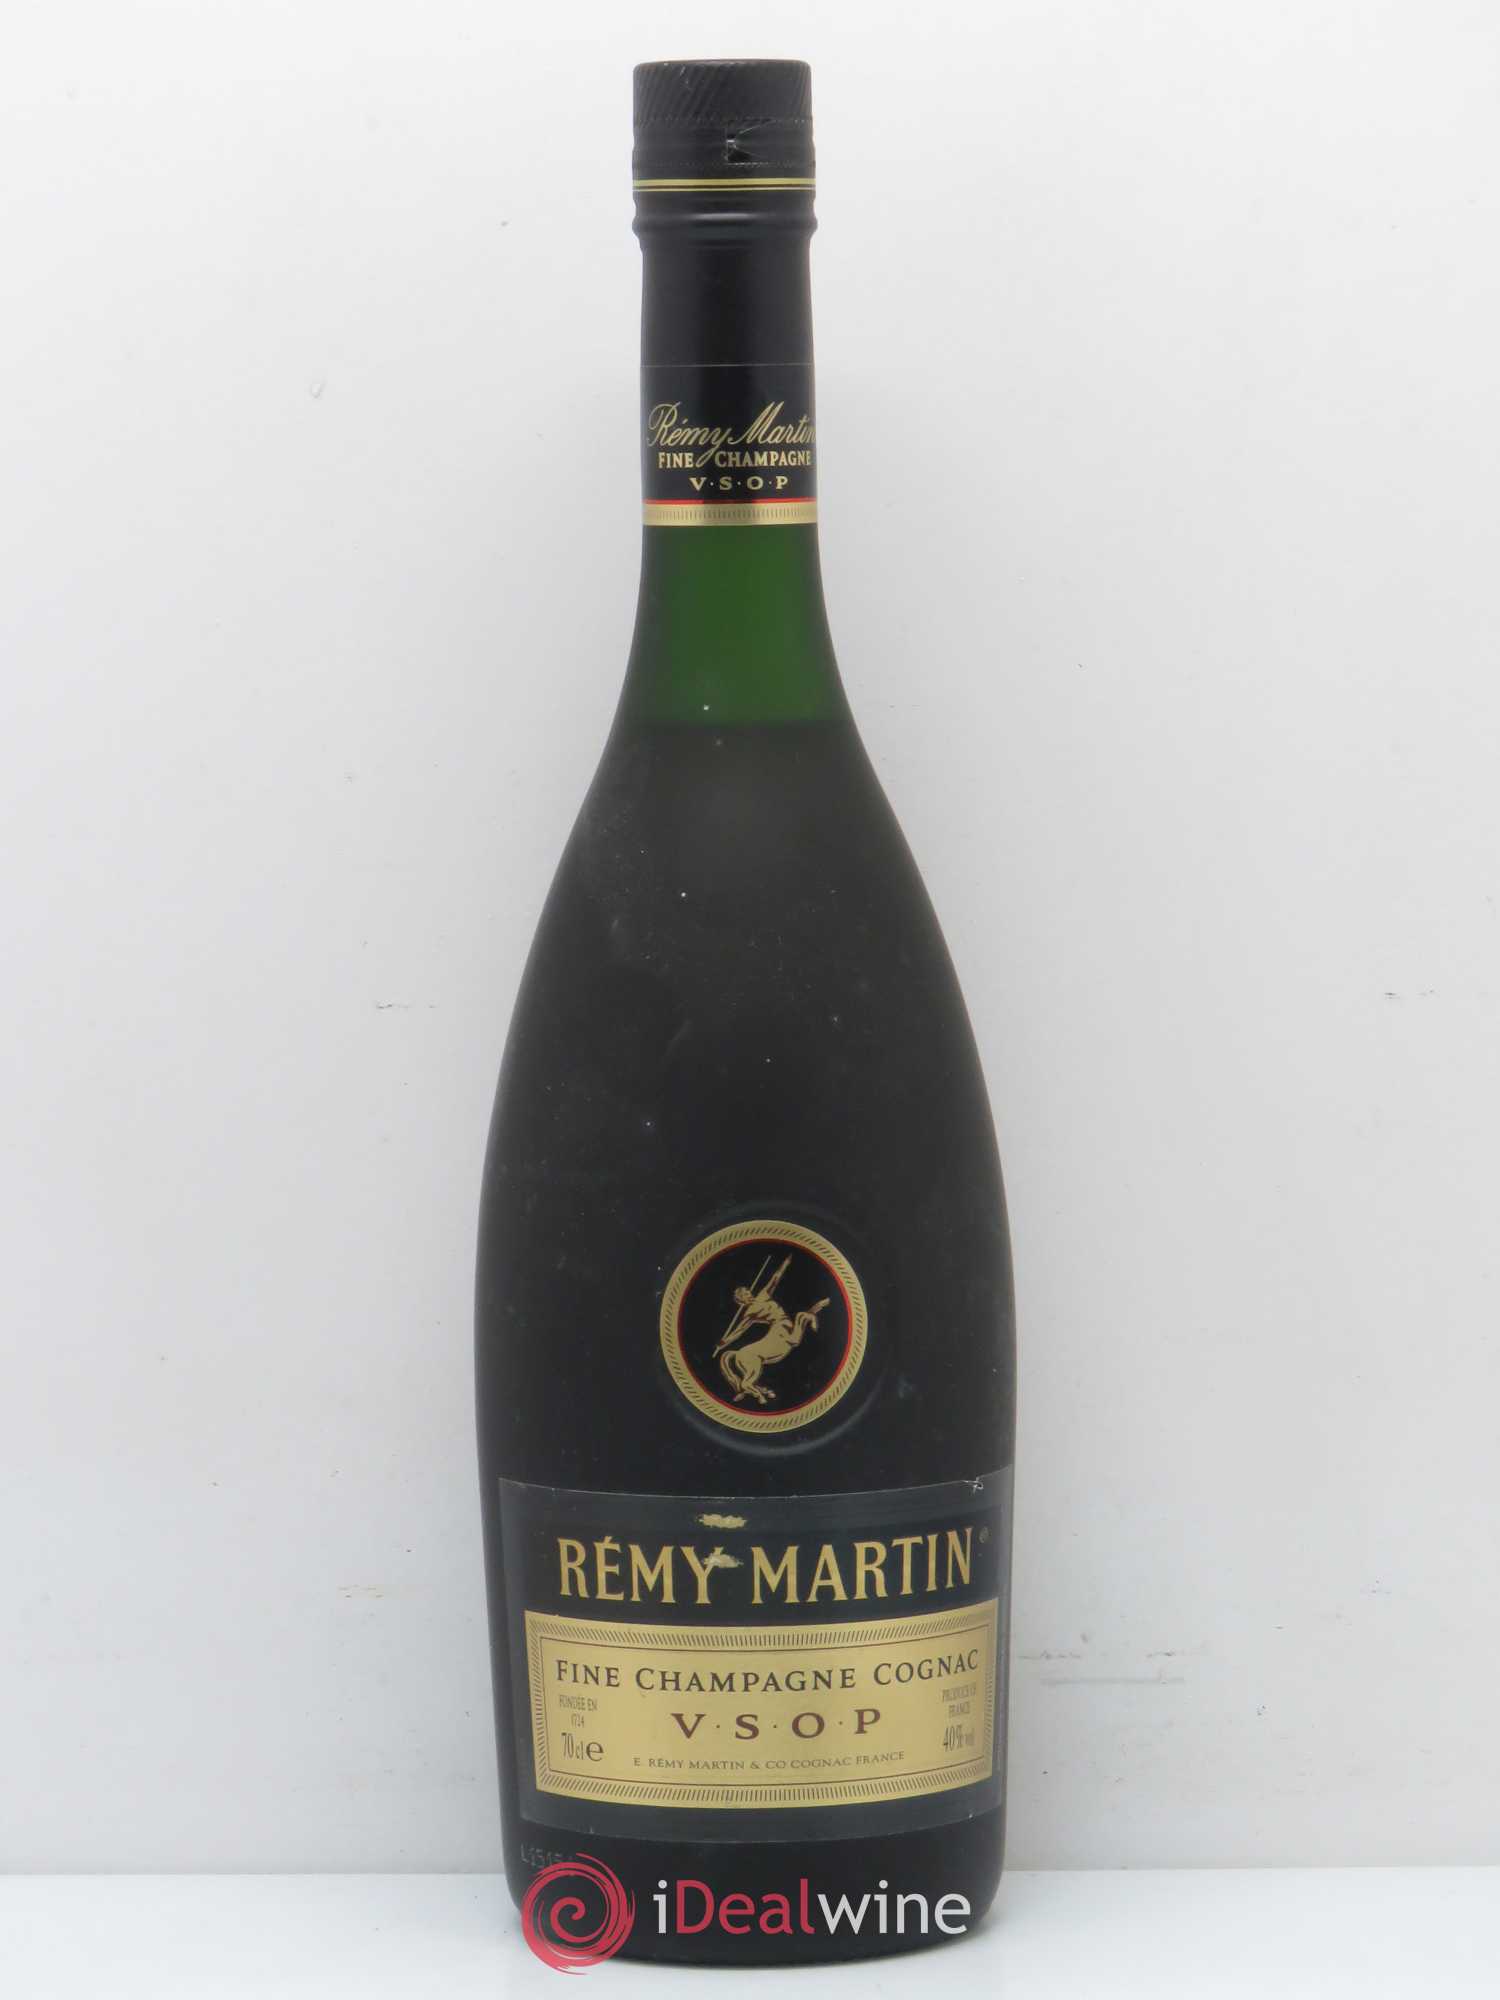 Remy шампанское. Remy Martin Champagne Cognac v.s.o.p. Remy Martin Fine Champagne Cognac.